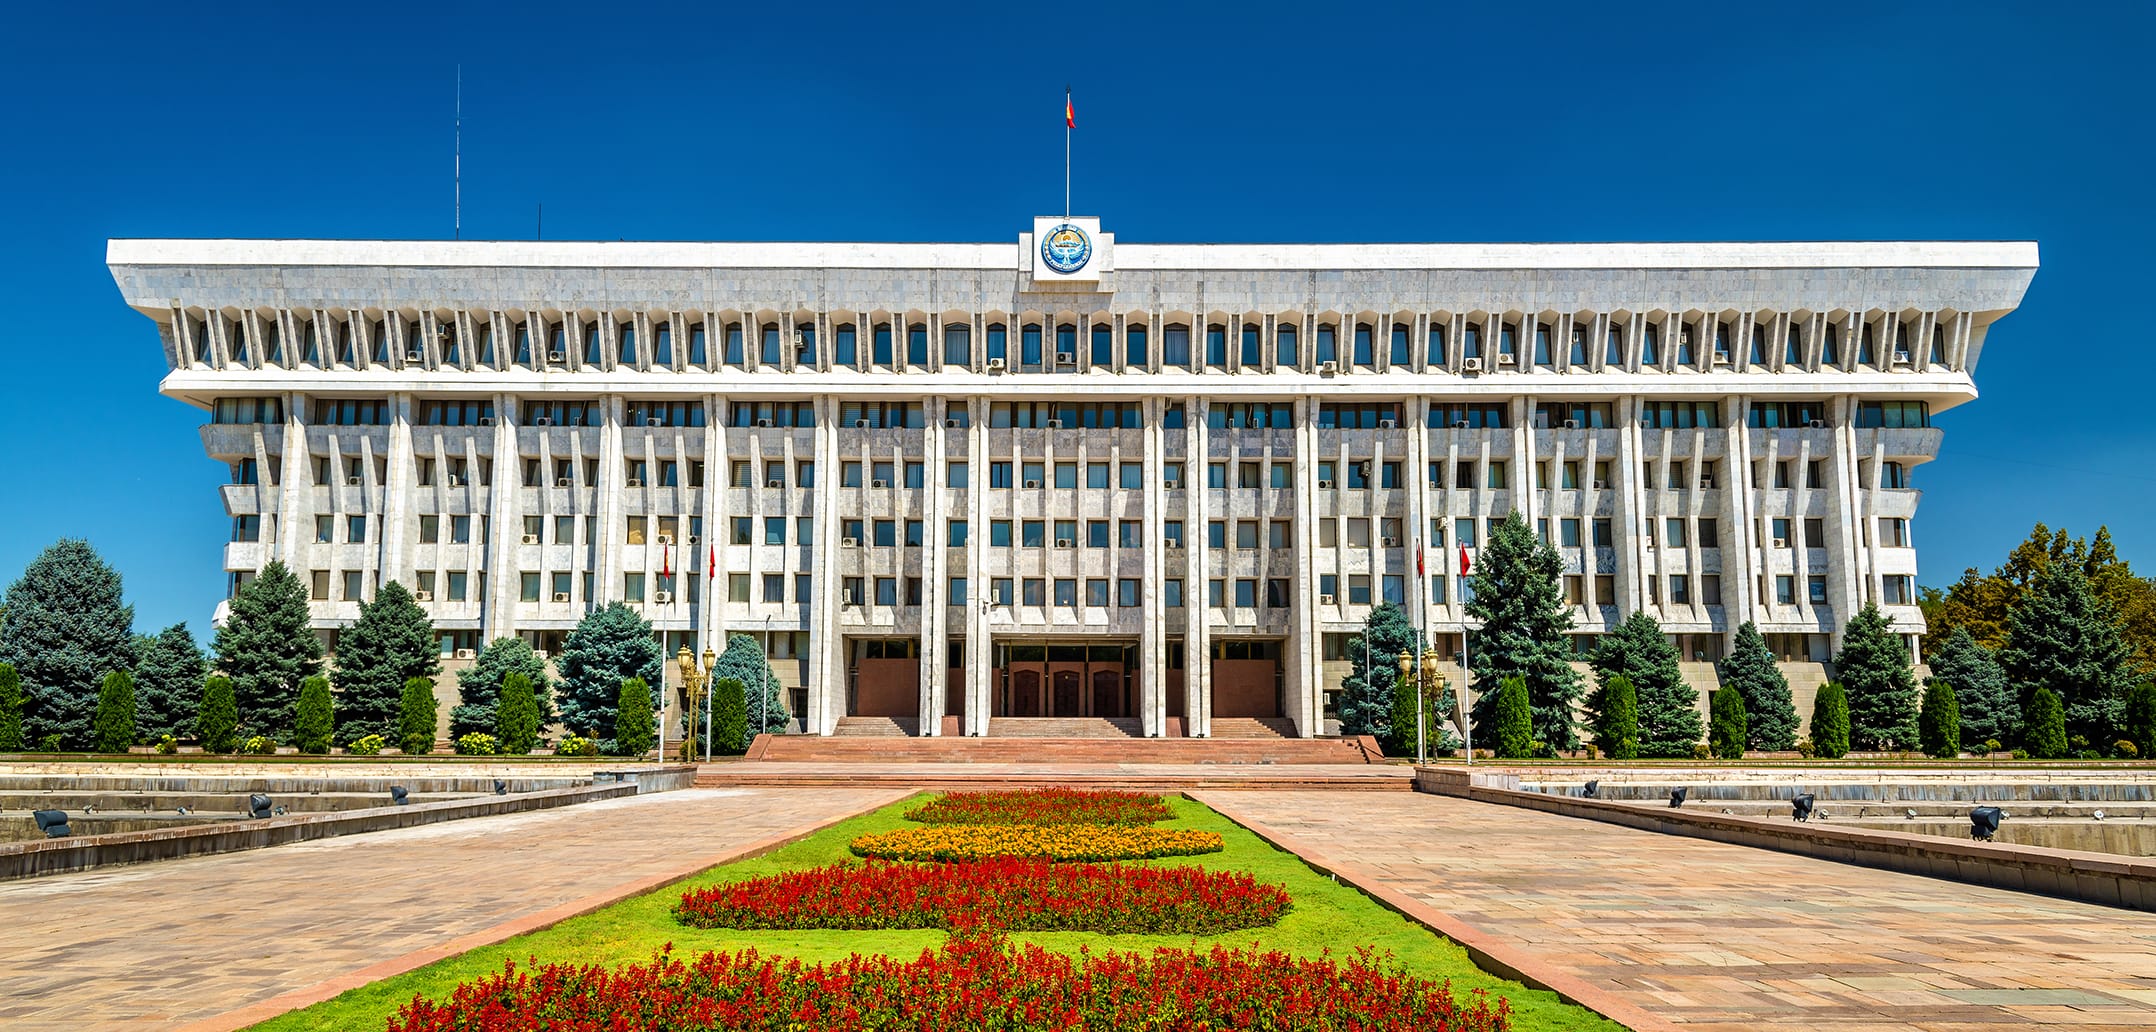 Changes in Legislation of Kyrgyzstan On December 4, 2021